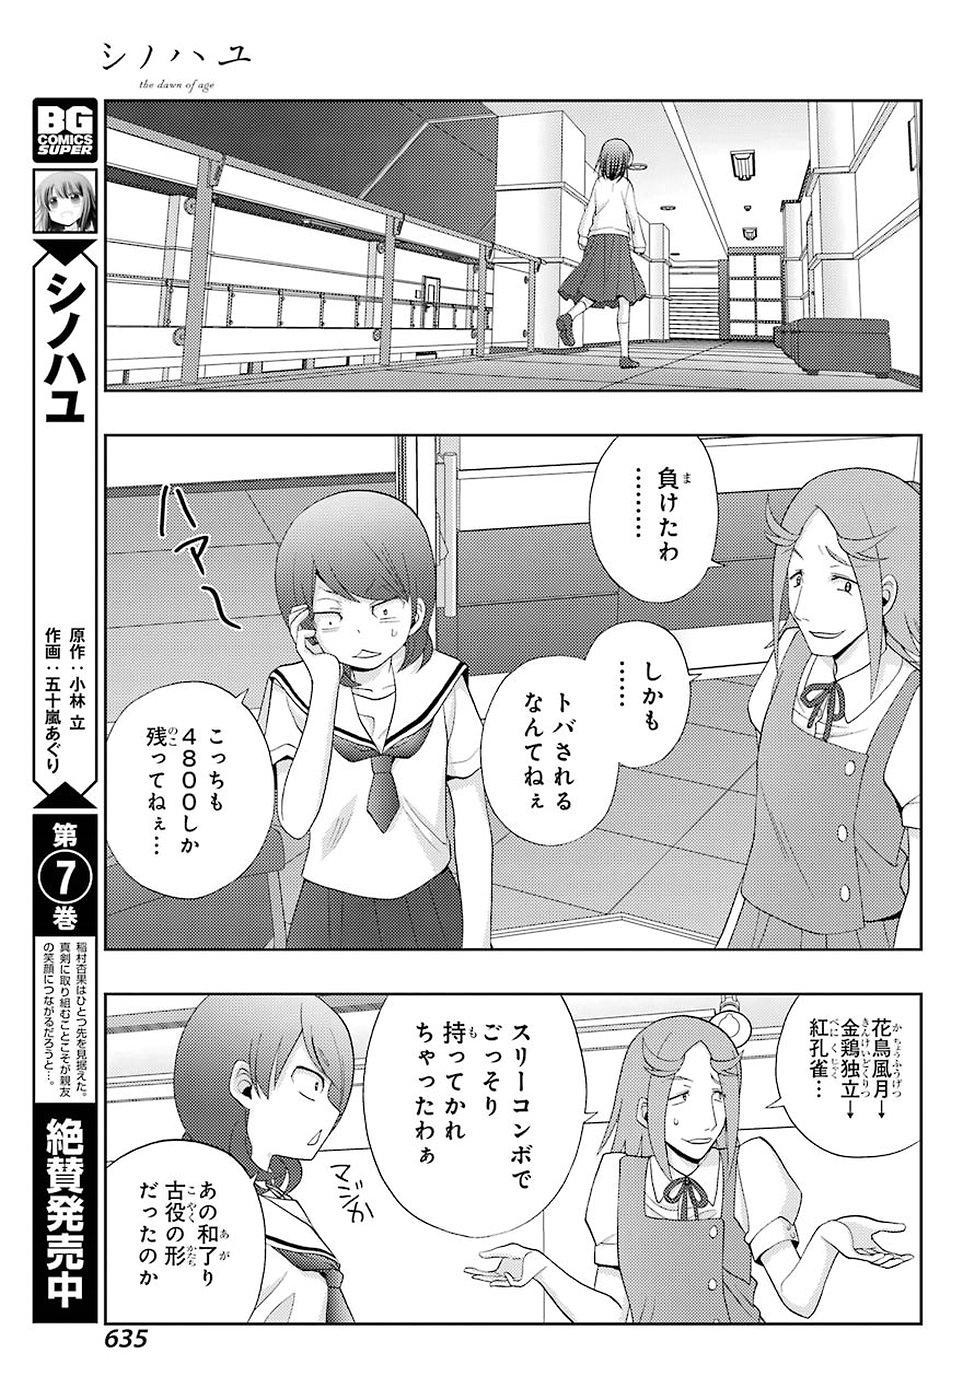 Shinohayu - The Dawn of Age Manga - Chapter 047 - Page 3